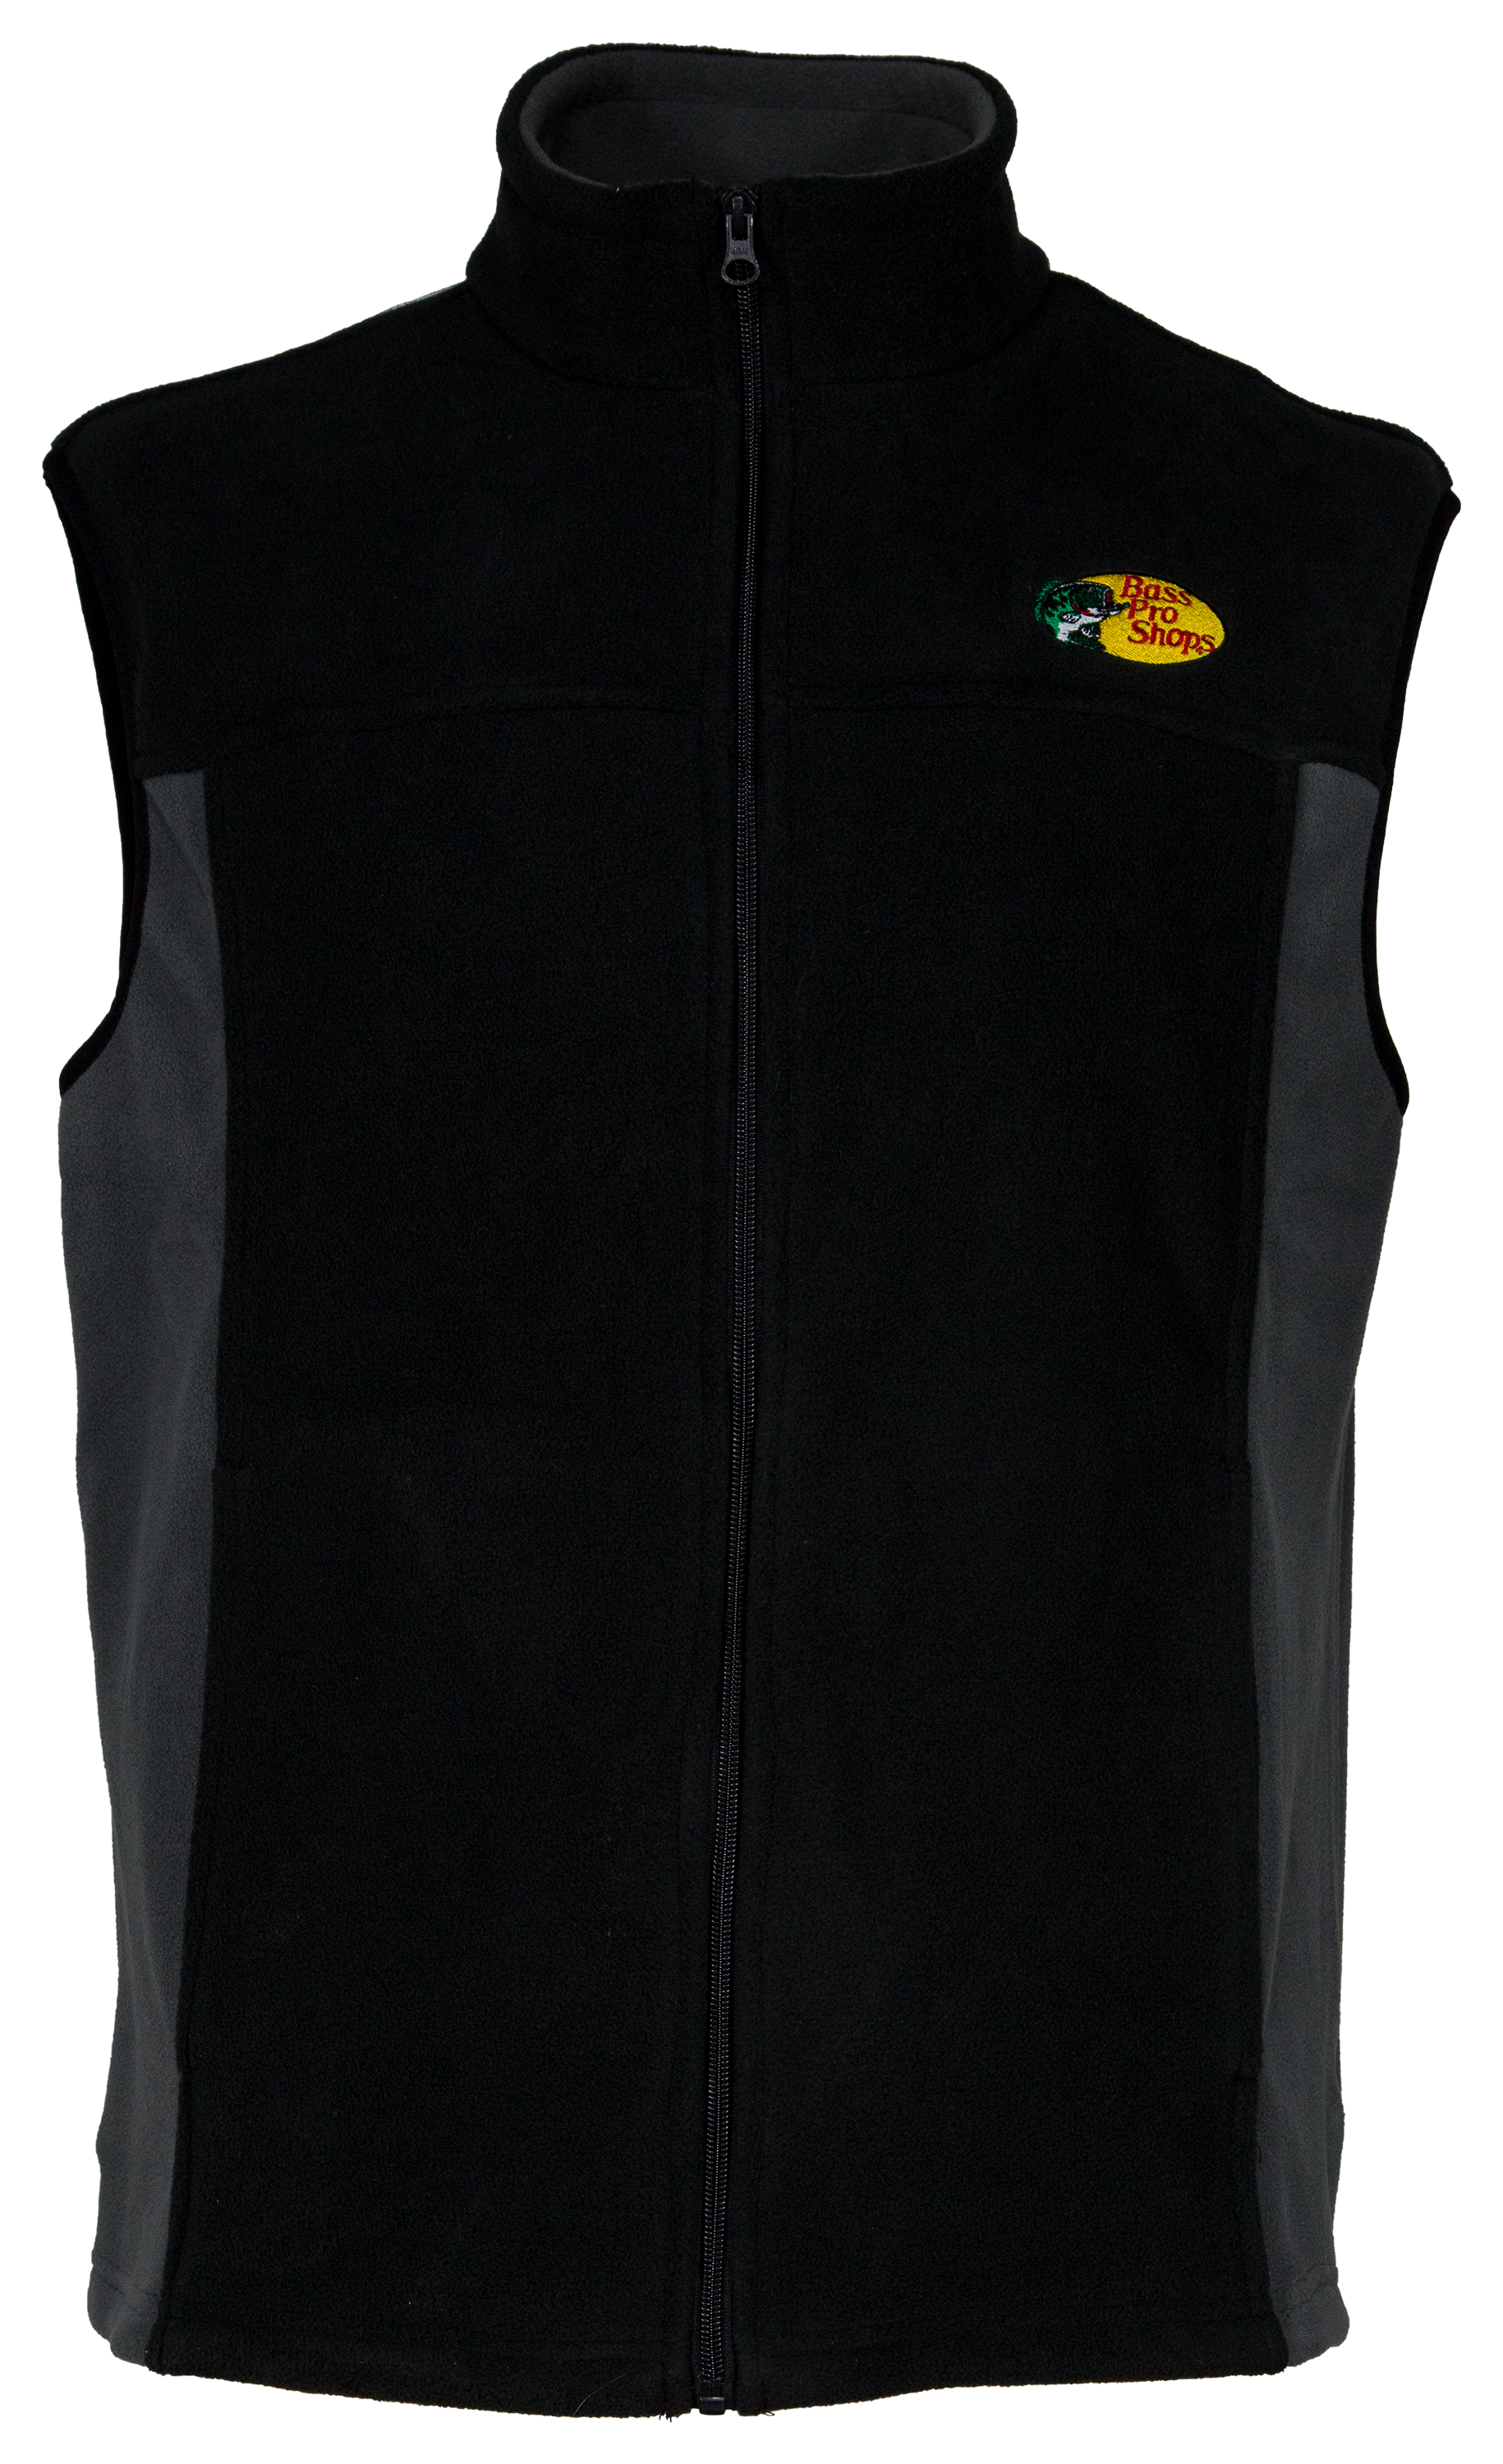 Bass Pro Shops Fleece Vest for Men